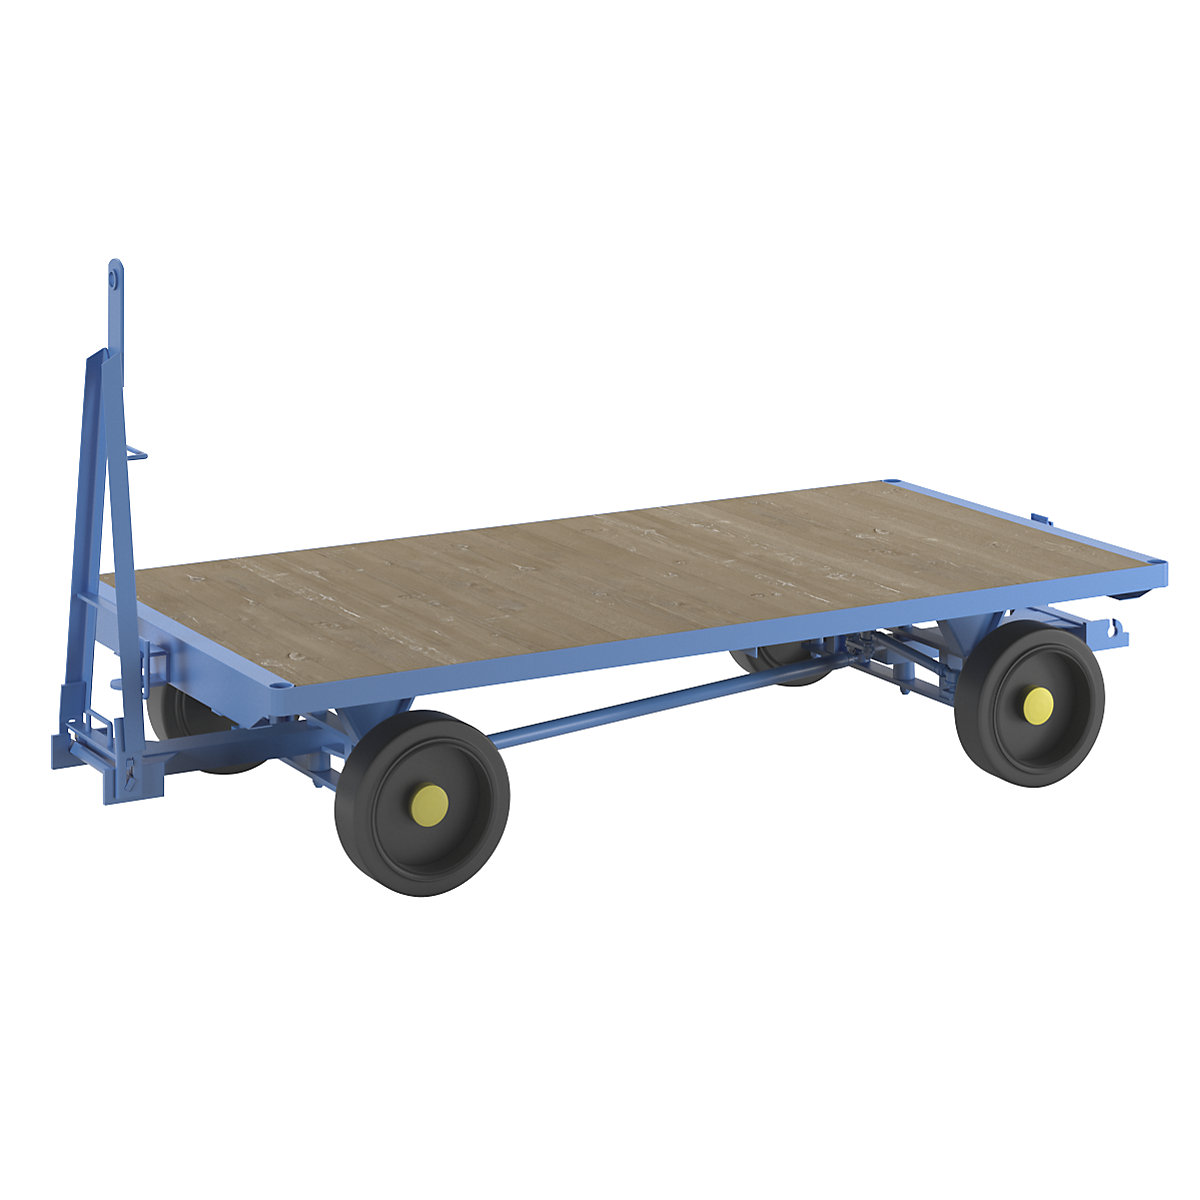 Trailer – eurokraft pro, 4-wheel linked ackerman steering, max. load 5 t, platform 2.5 x 1.25 m, light blue-2